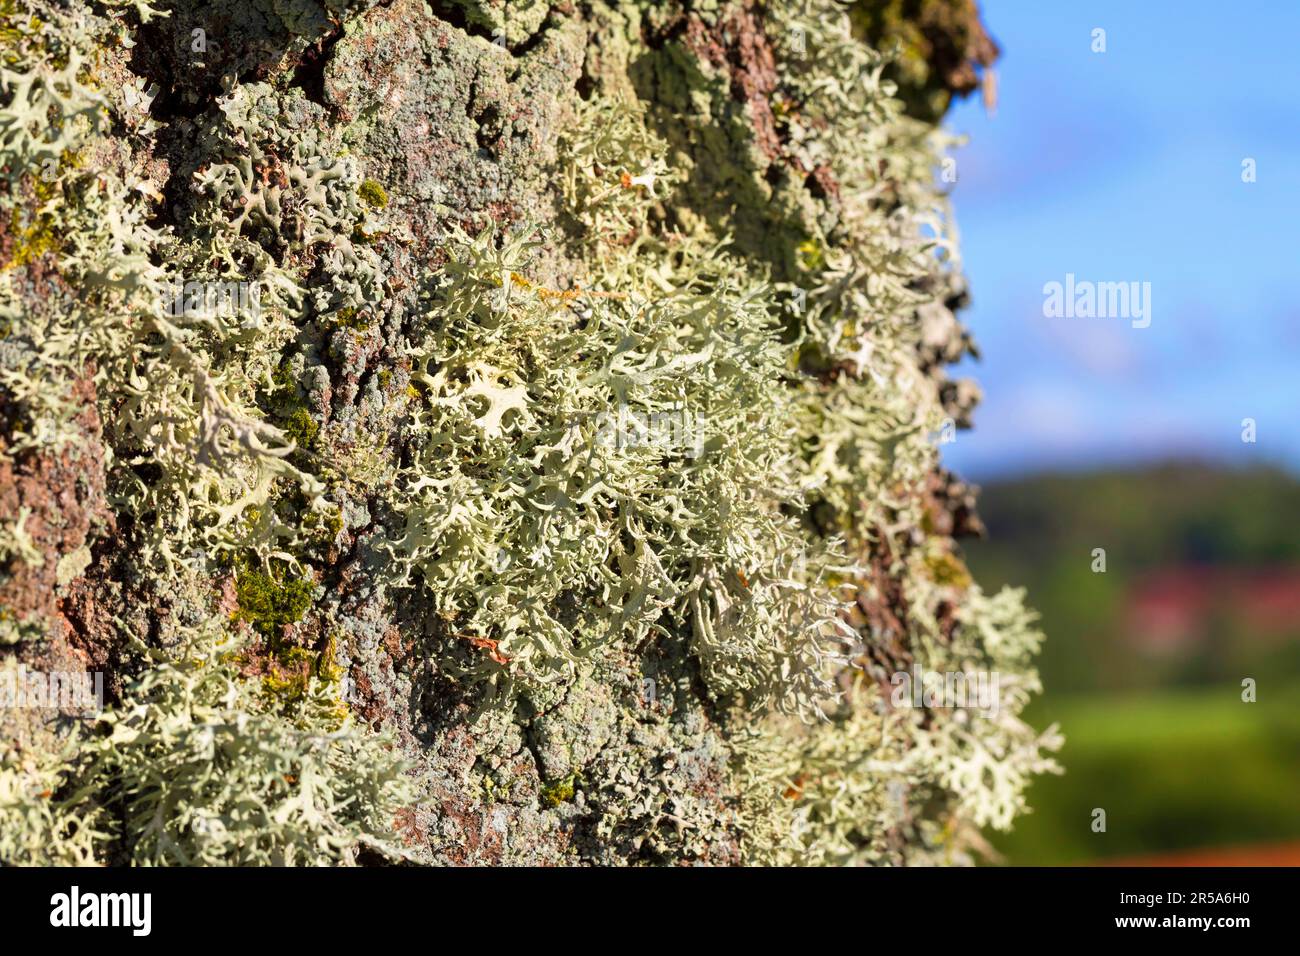 oakmoss (Evernia prunastri), at a birch trunk, Sweden Stock Photo